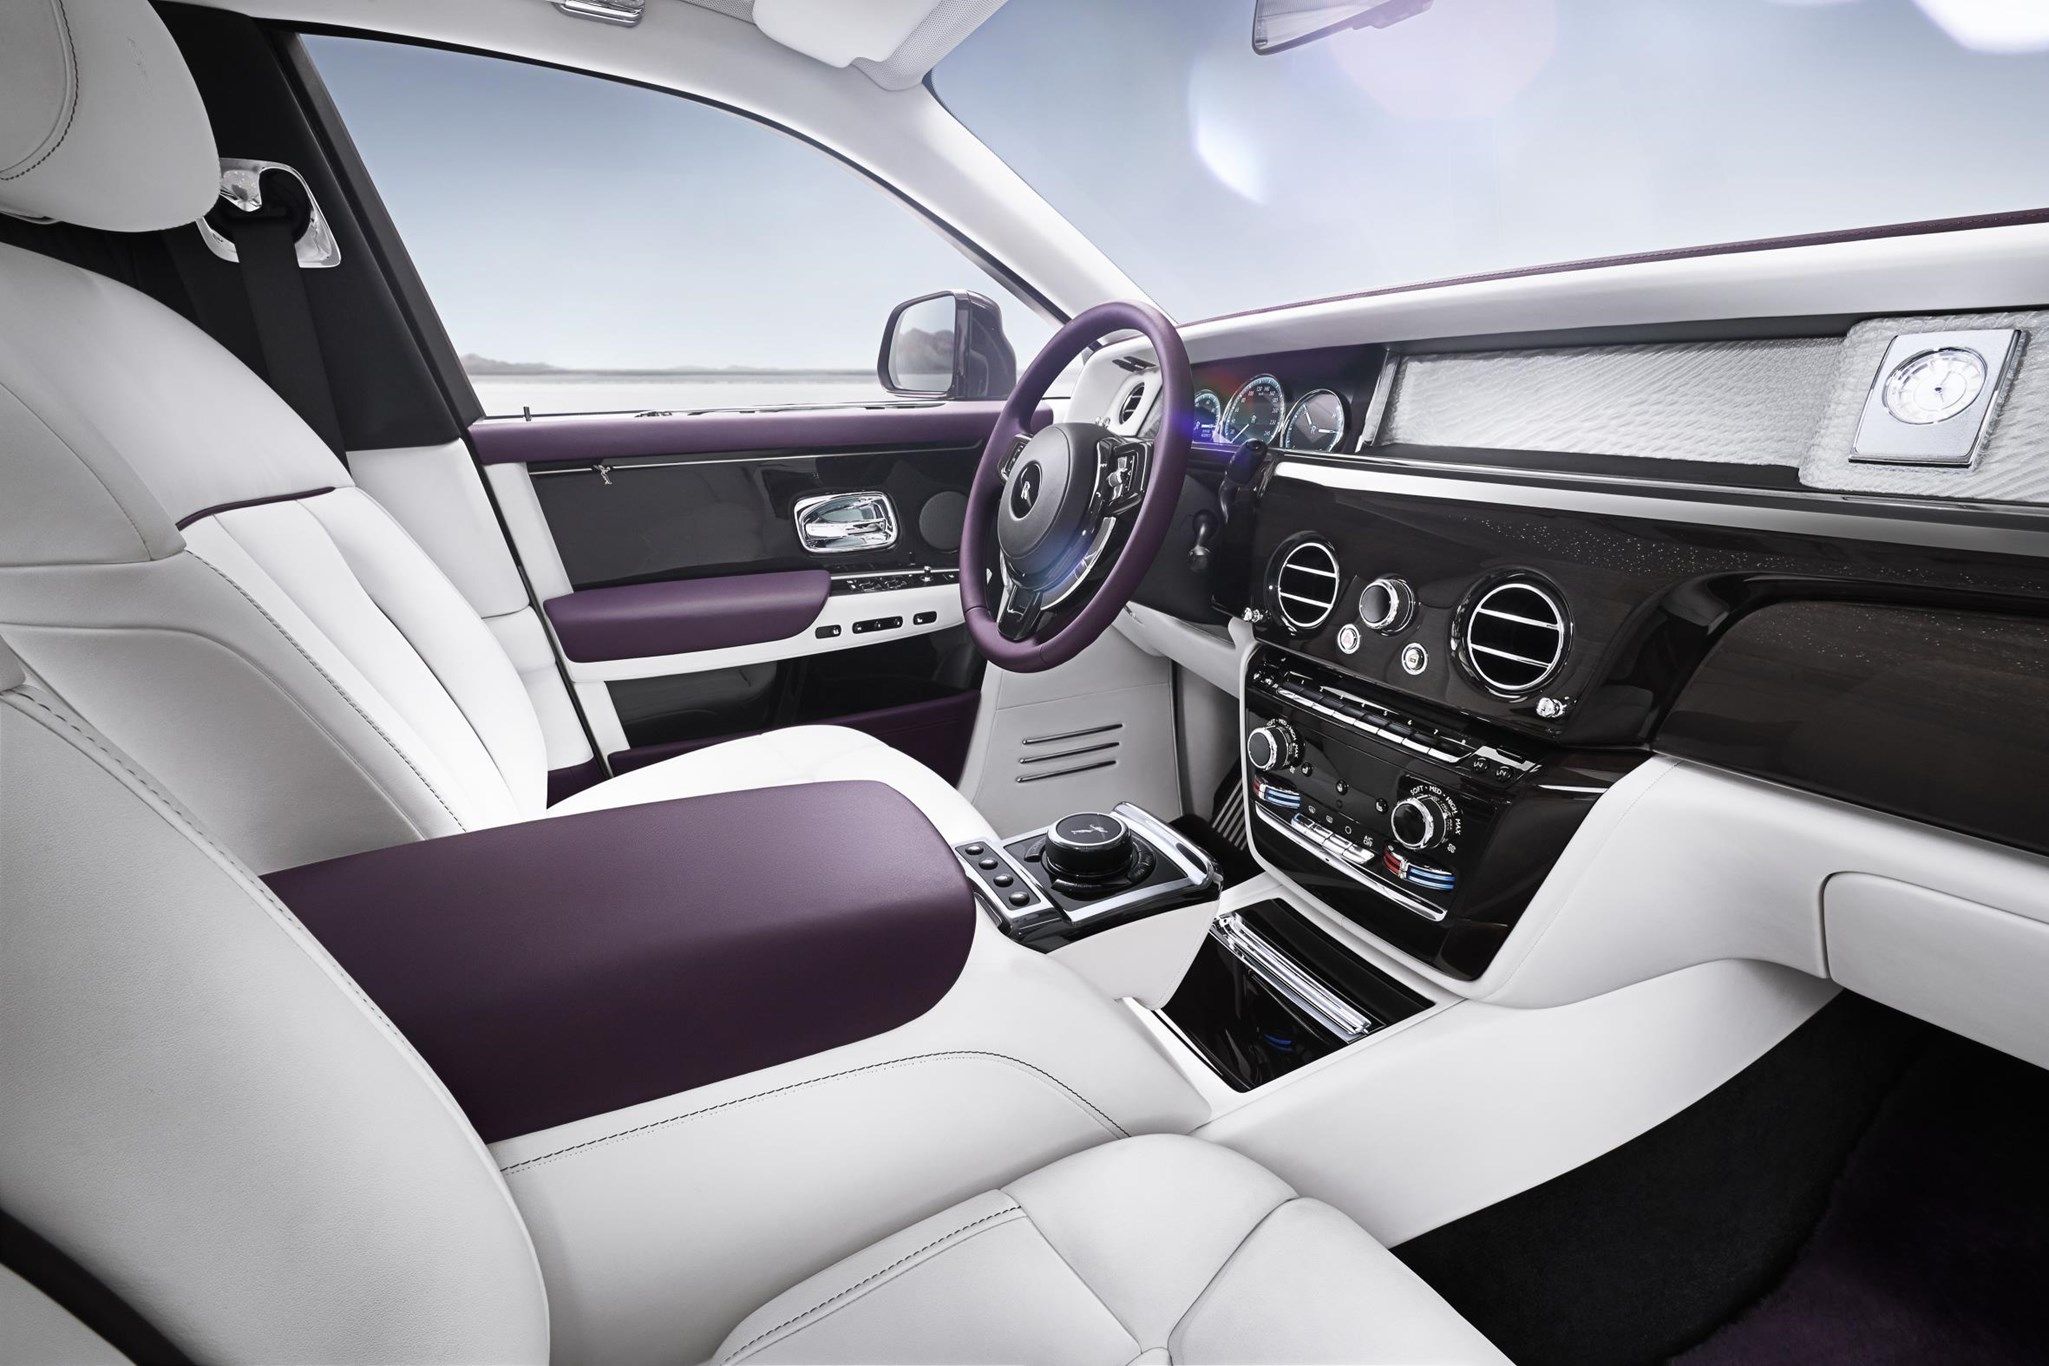 Rolls Royce Phantom luxurious interior